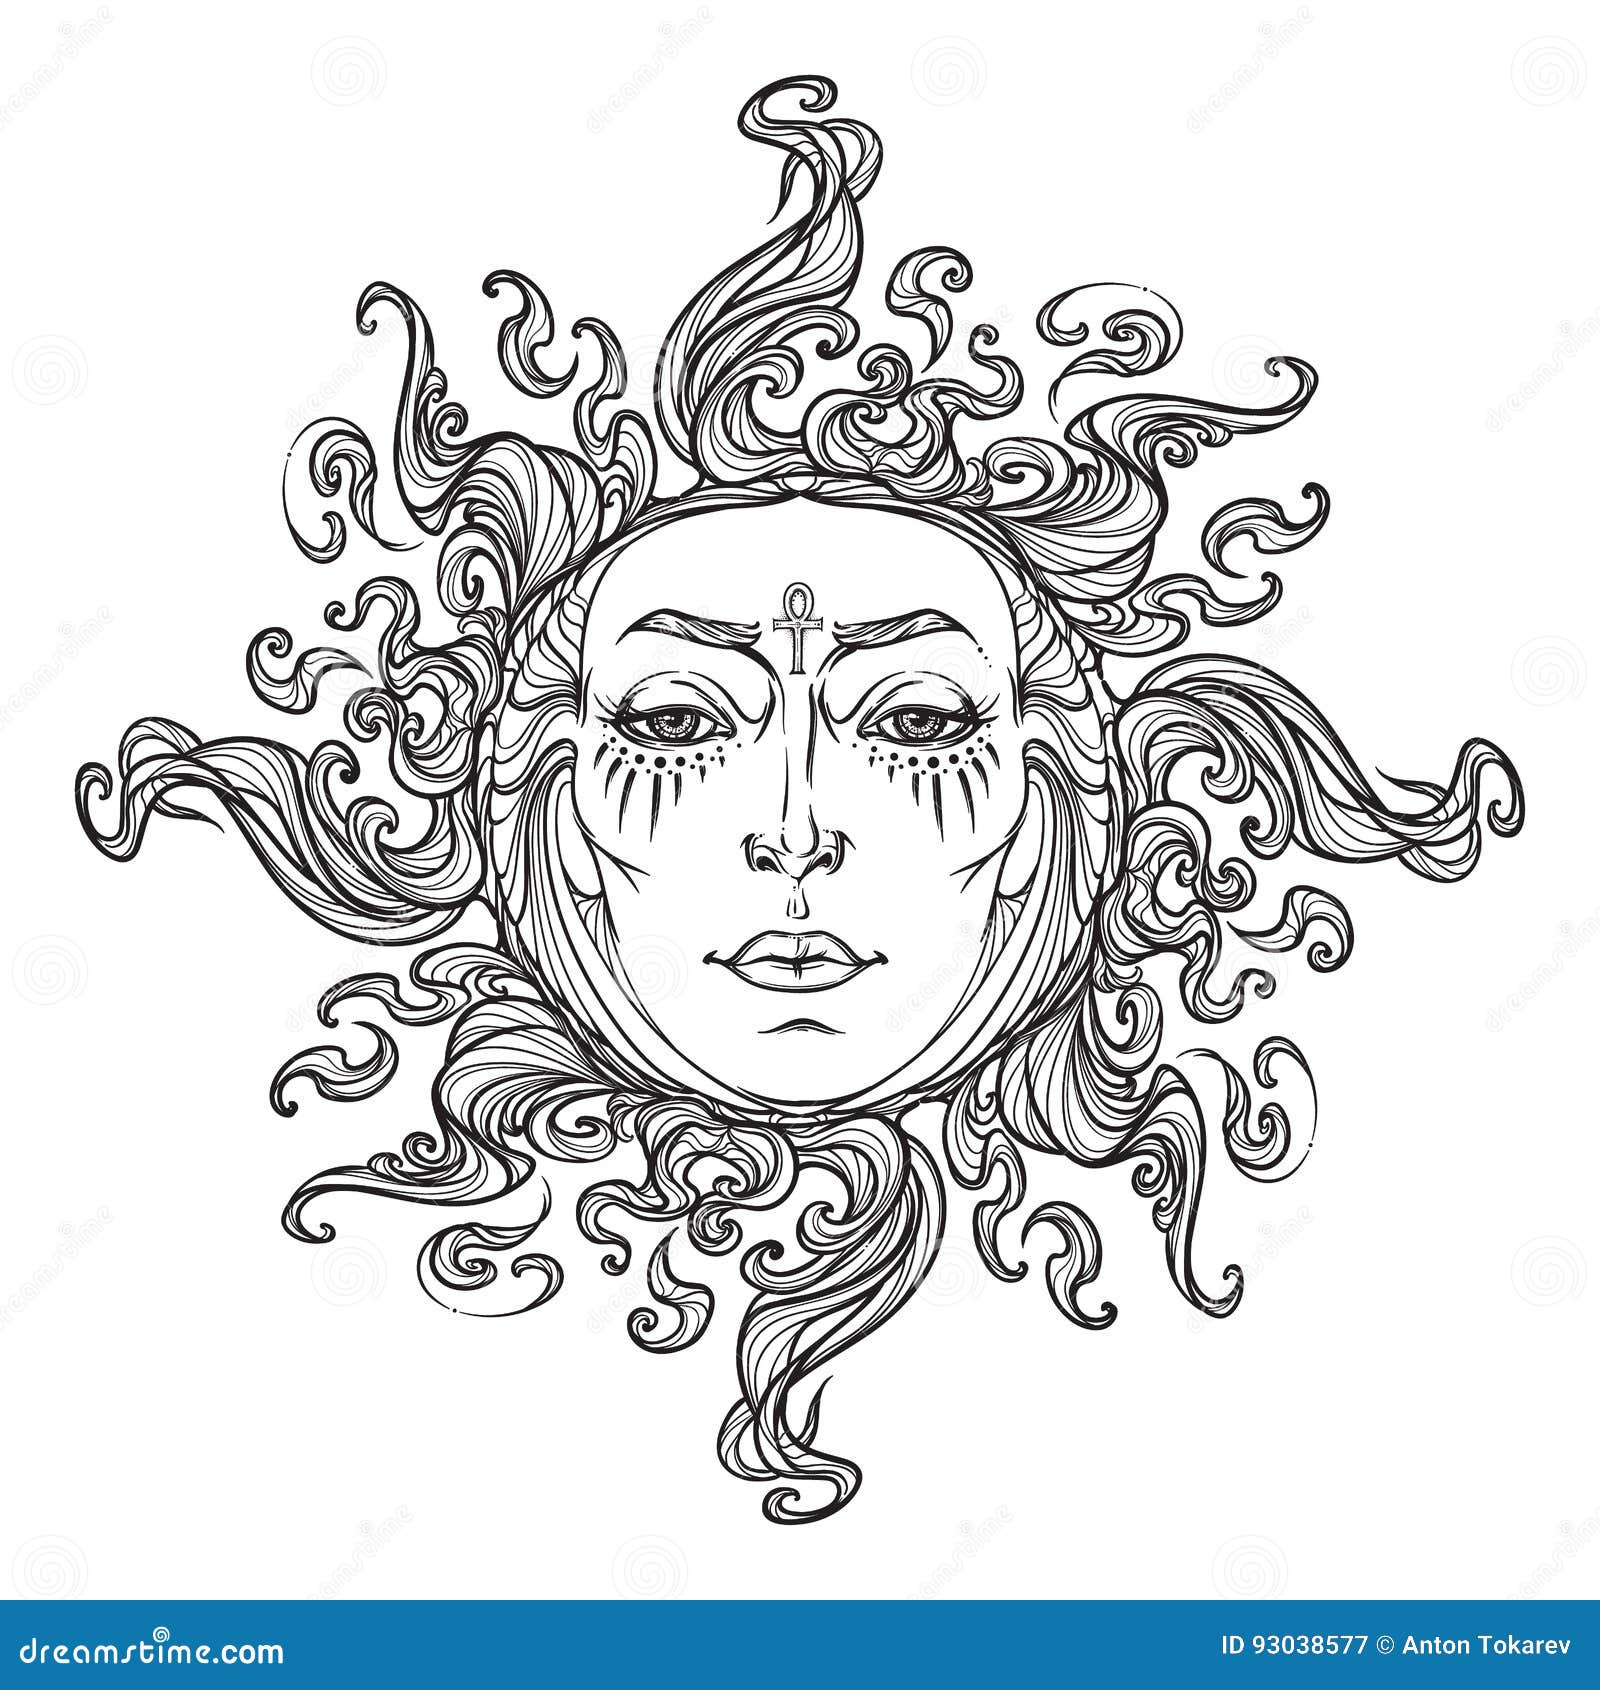 Fairytale Style Hand Drawn Sun with a Human Faces. Stock Vector ...